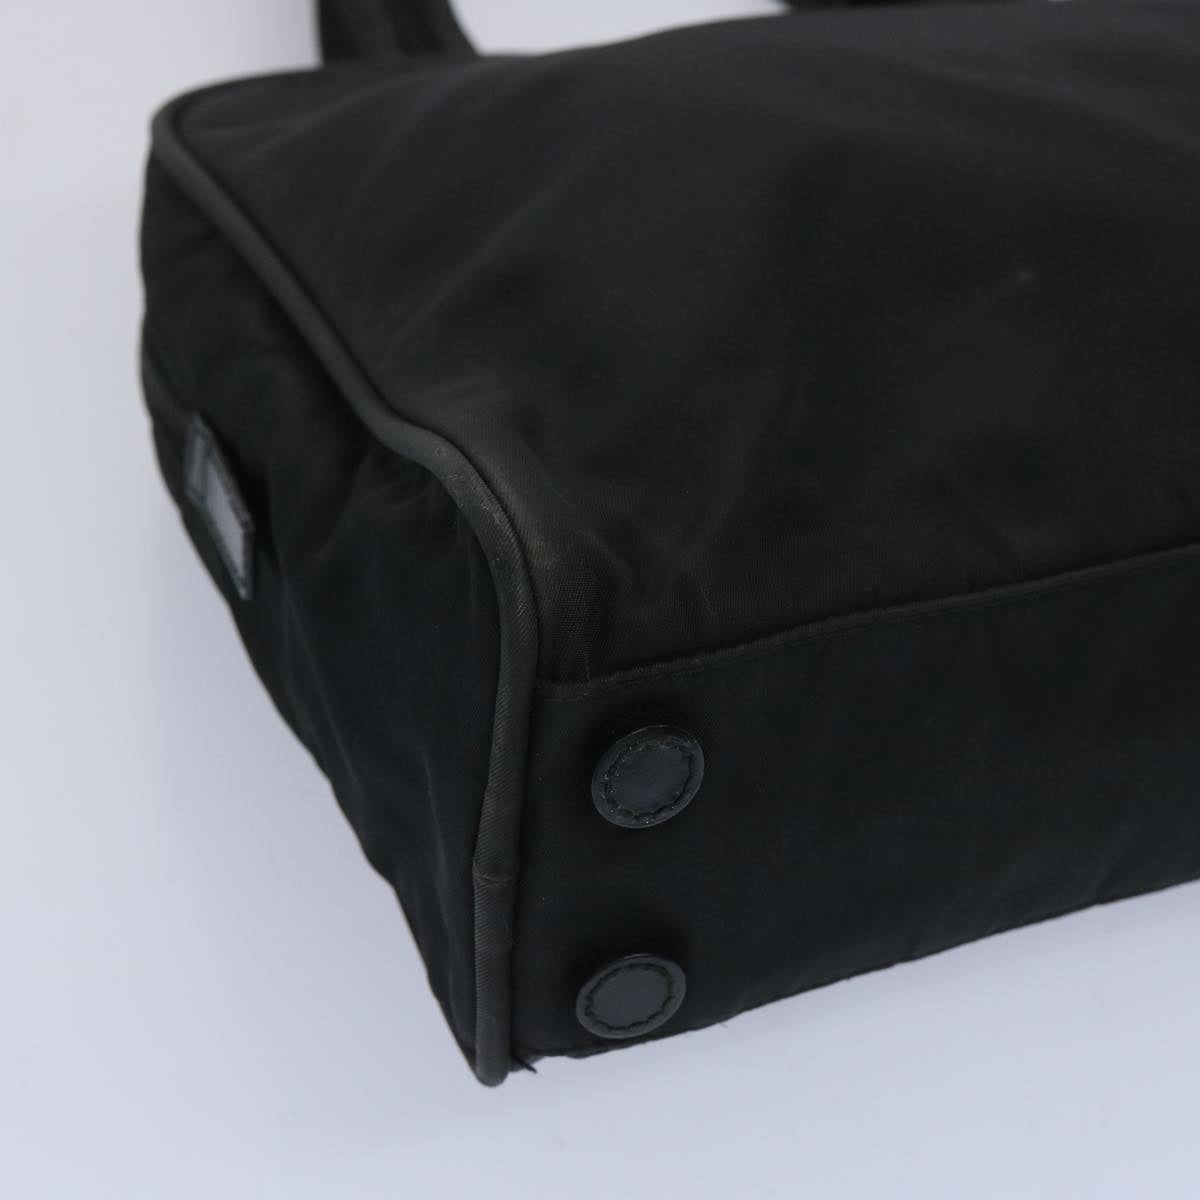 PRADA Hand Bag Nylon Black Auth am5650